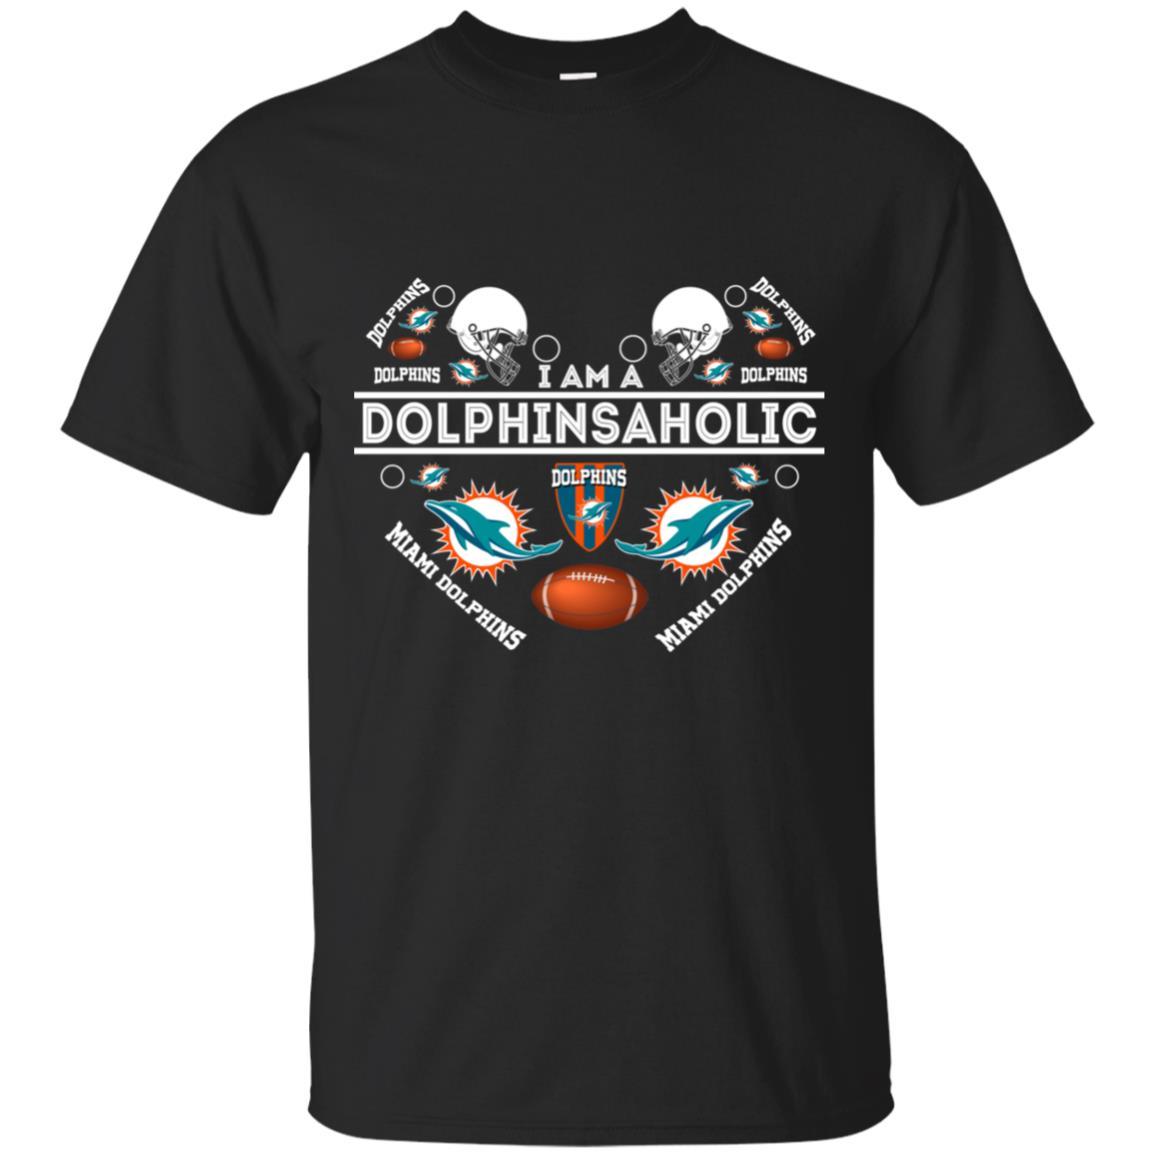 Miami Dolphins Shop - I Am A Dolphinsaholic Miami Dolphins T Shirts 1